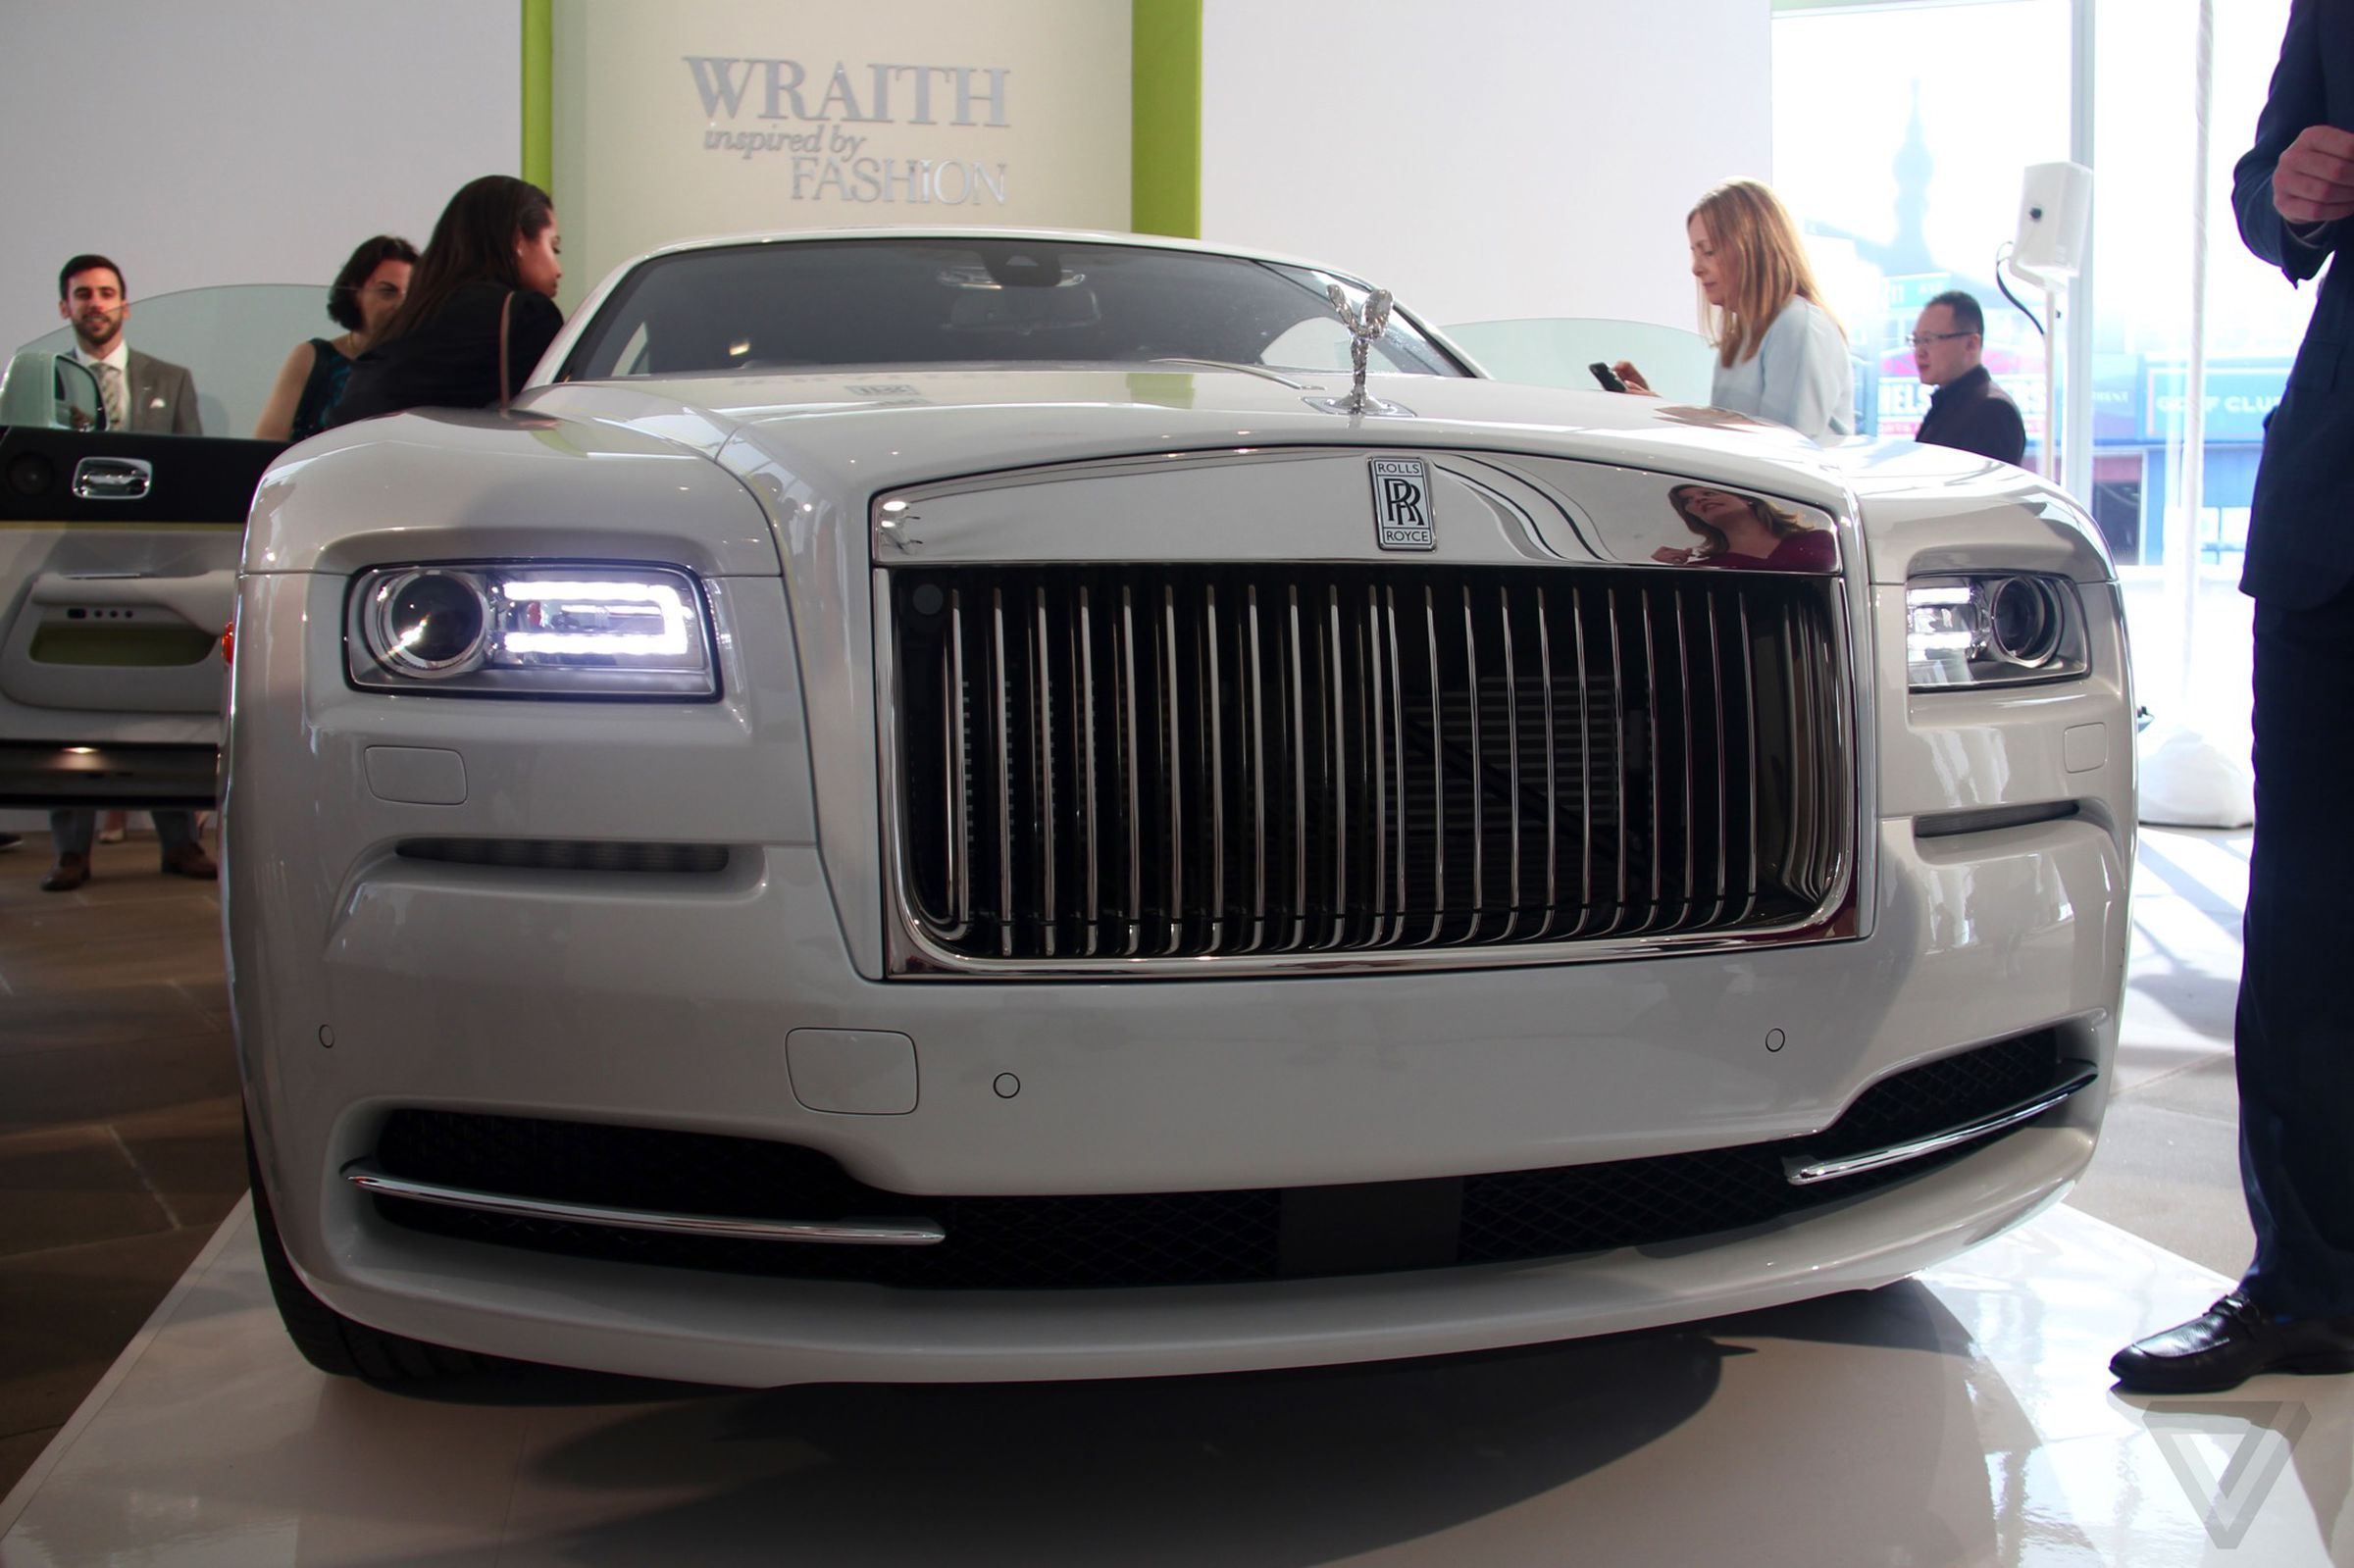 Rolls-Royce Wraith Inspired by Fashion unveil